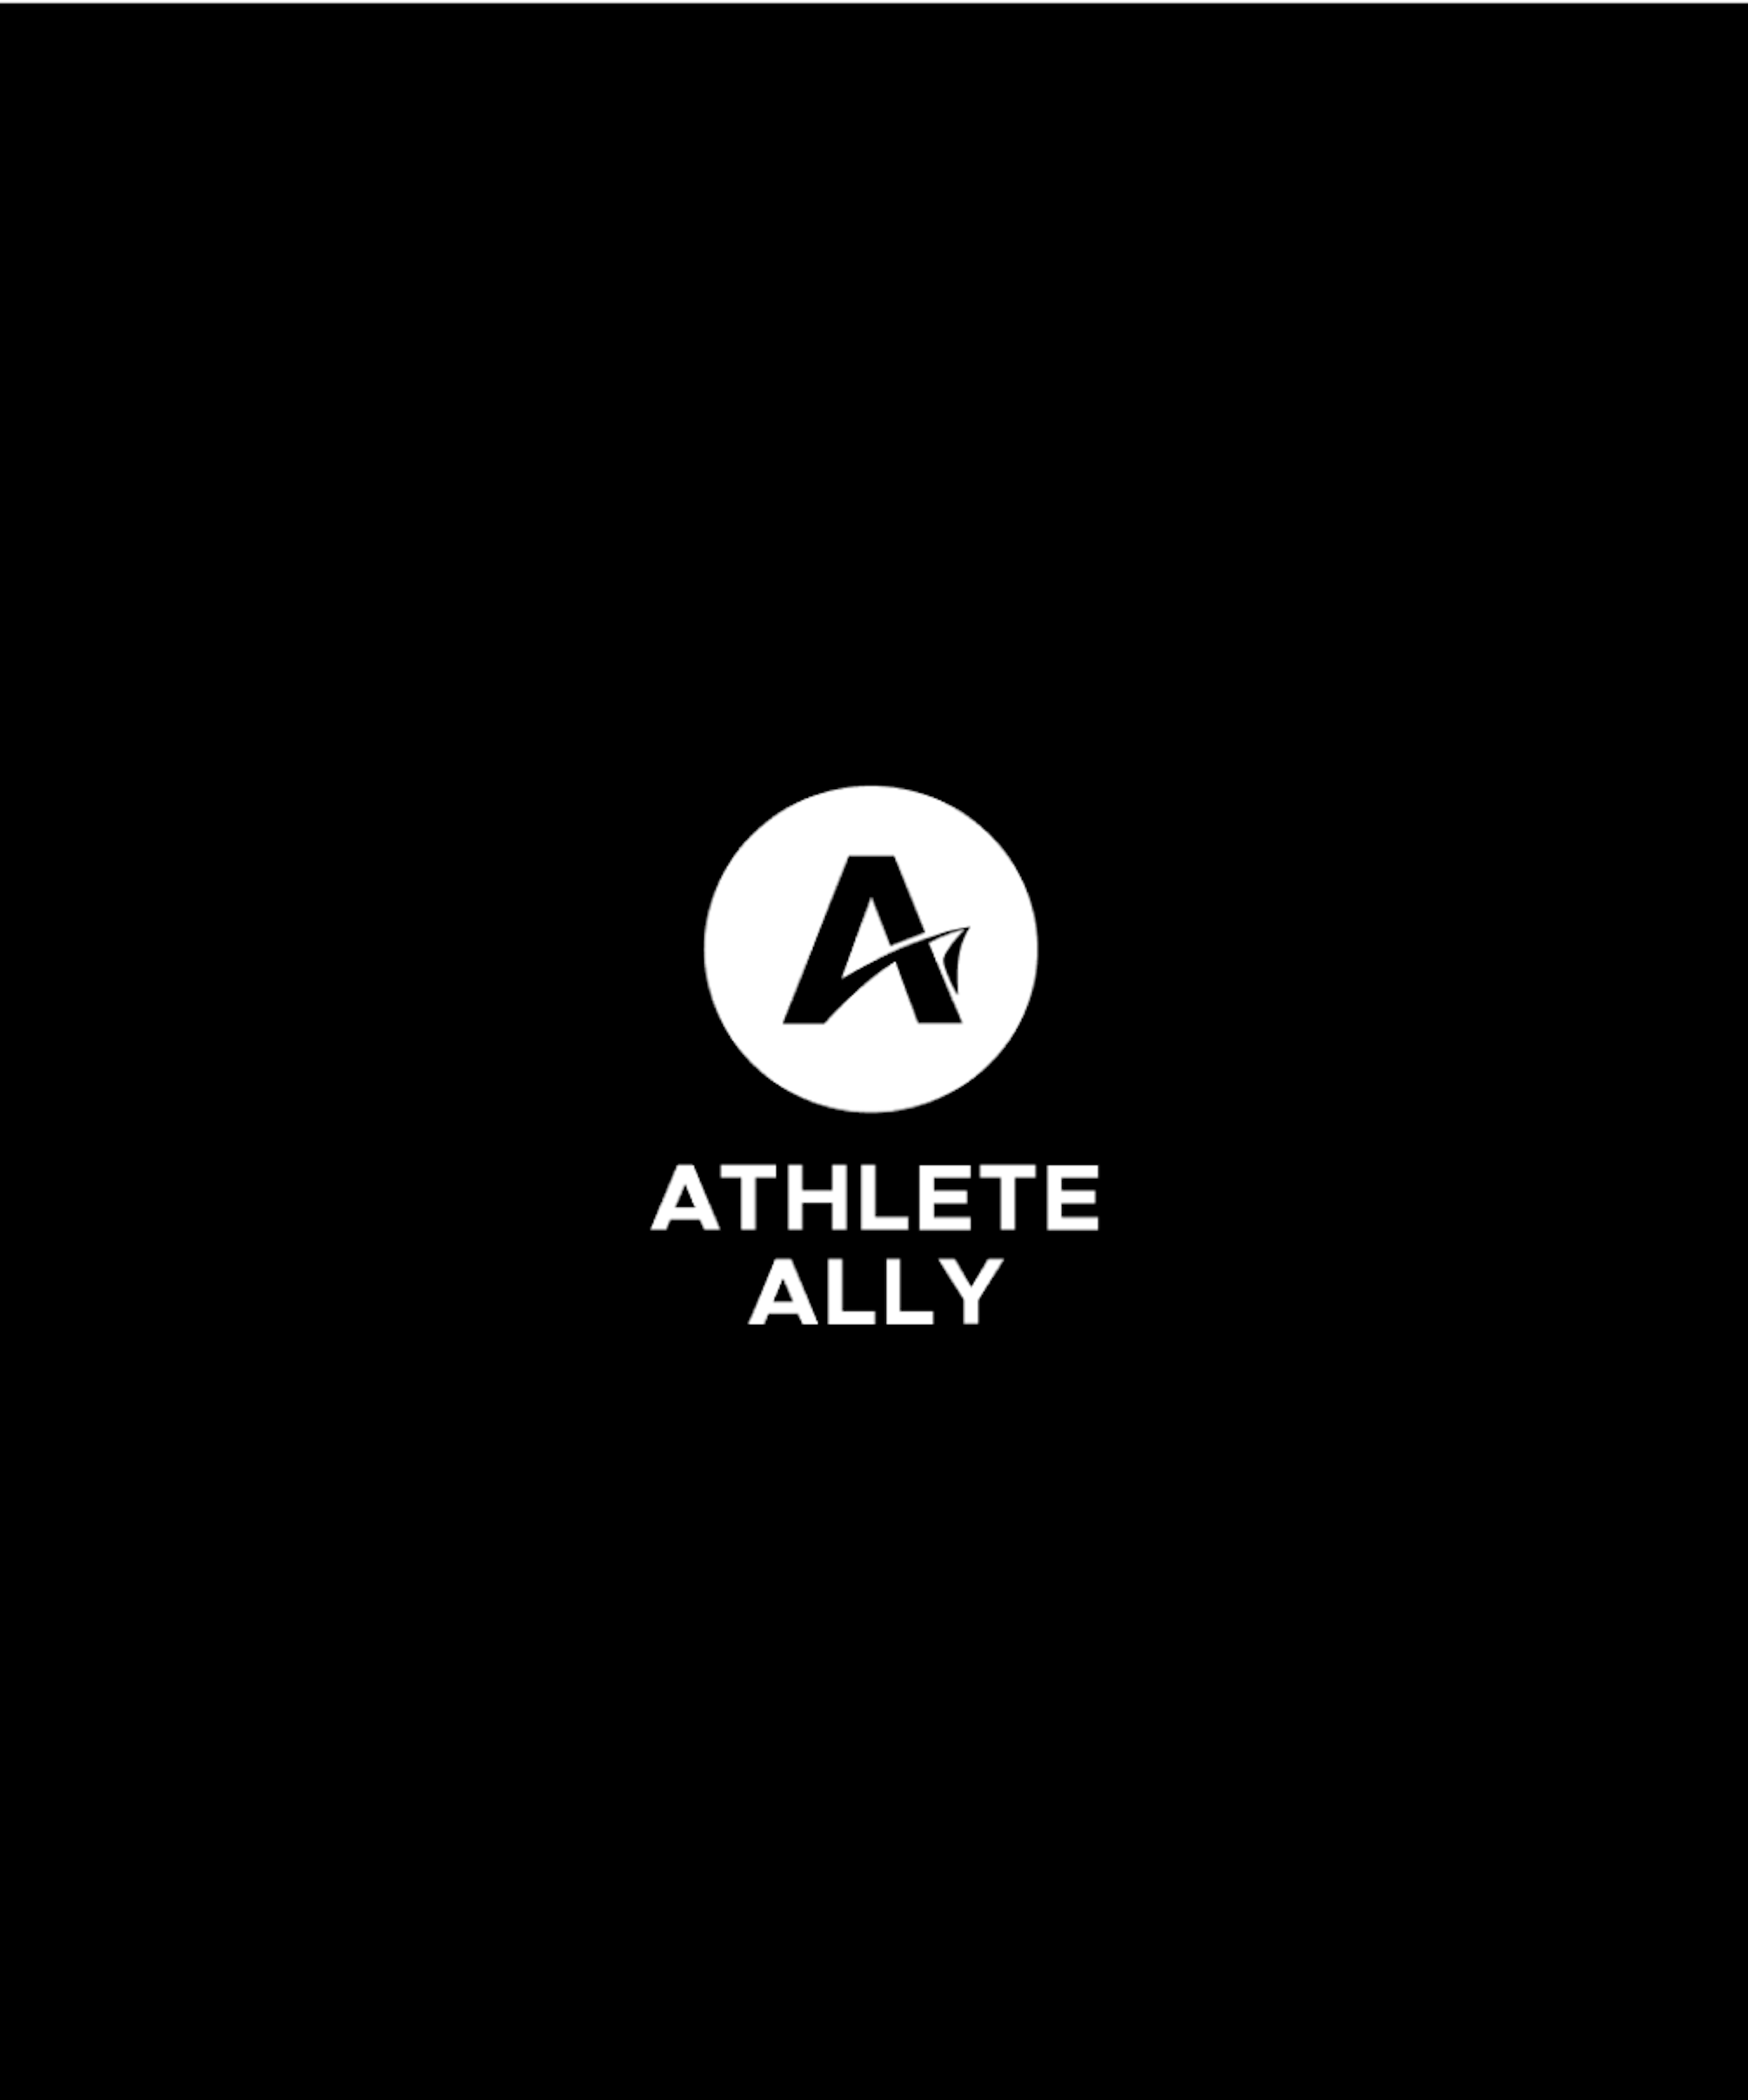 Athlete ally logo